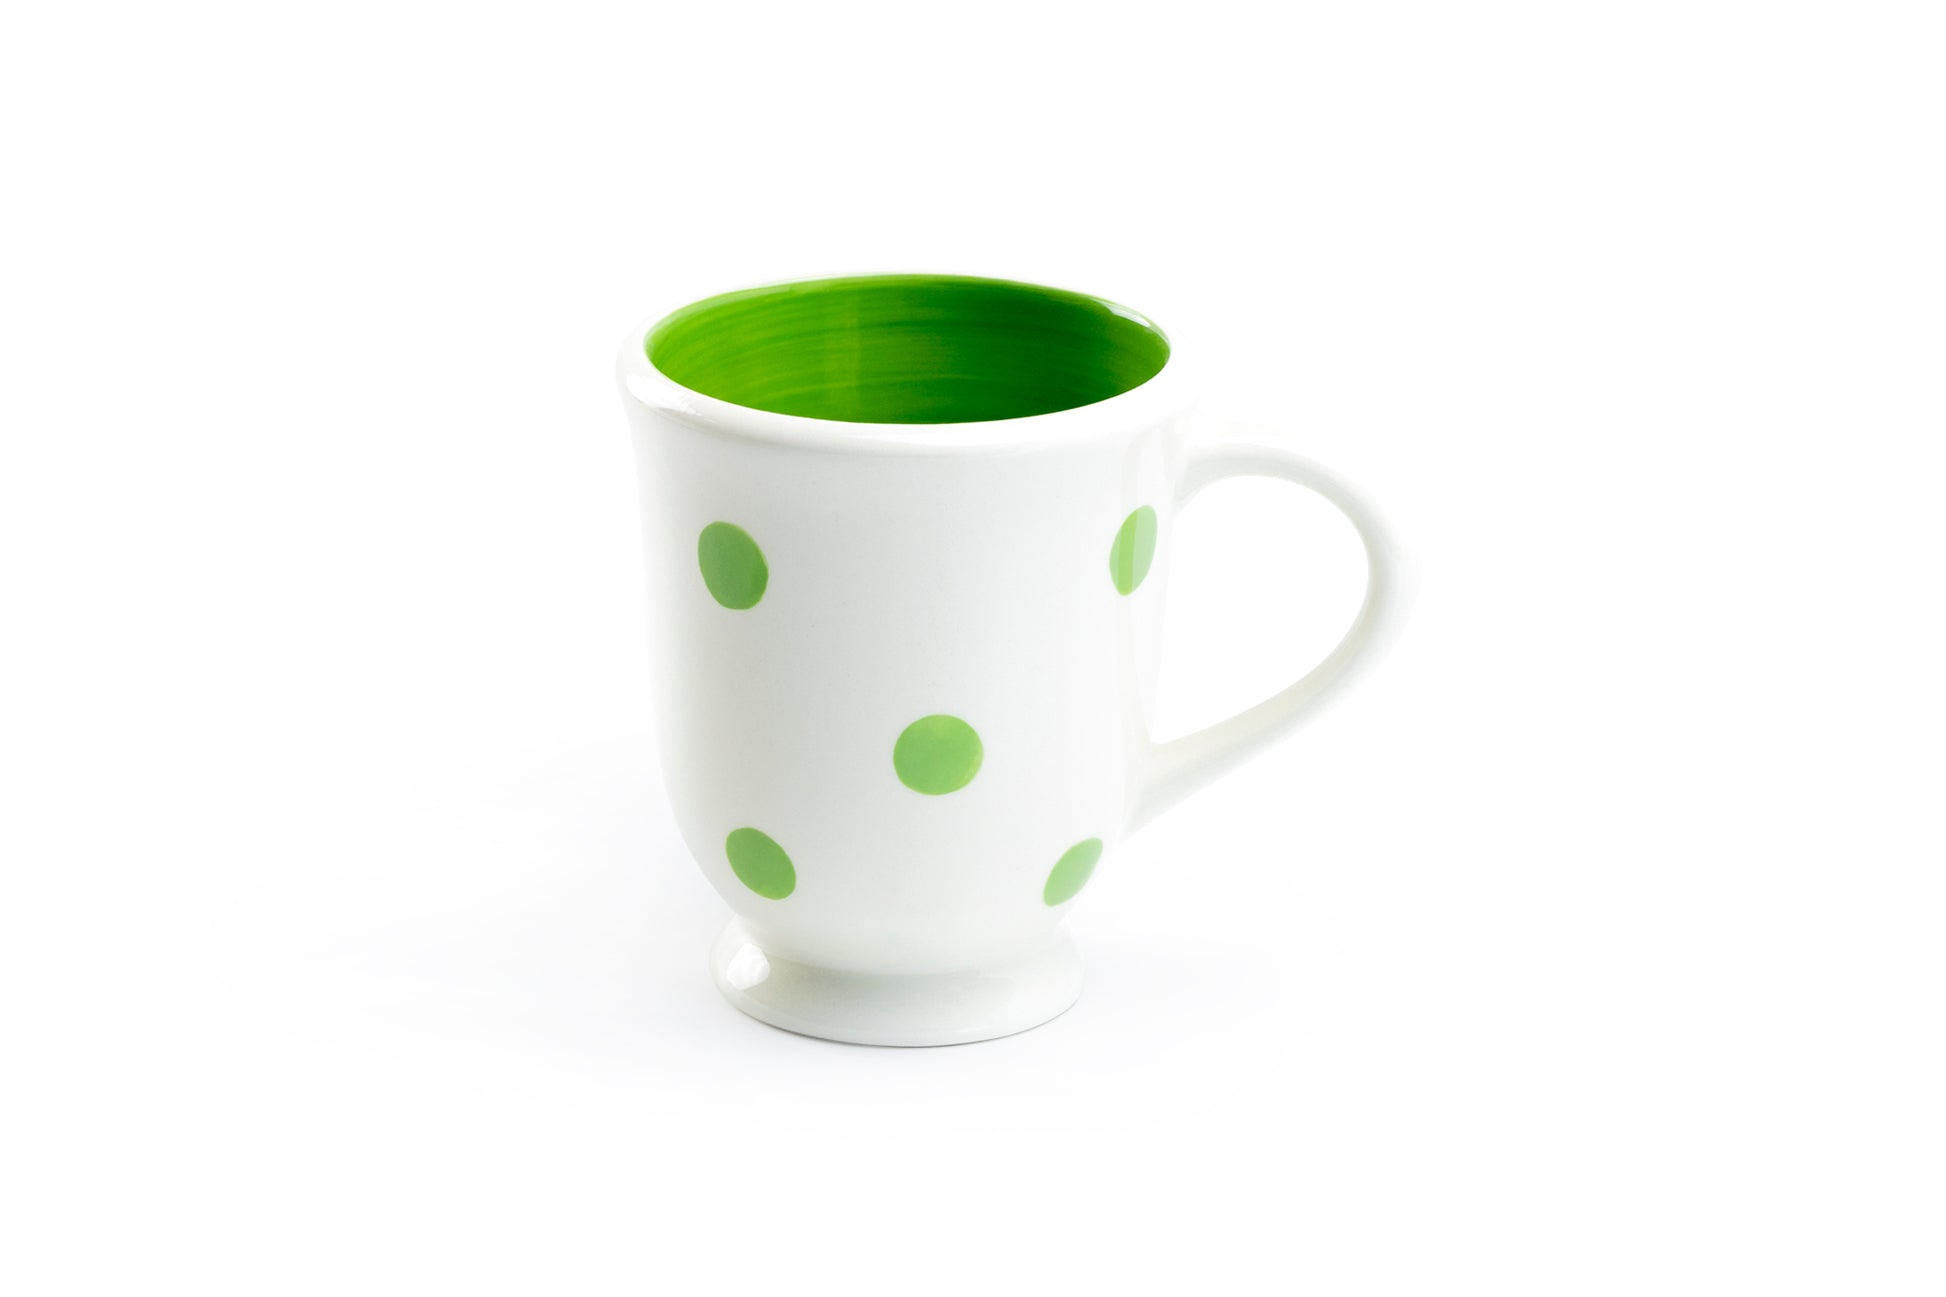 Terramoto Ceramic Polka Dots Mug - Green on White